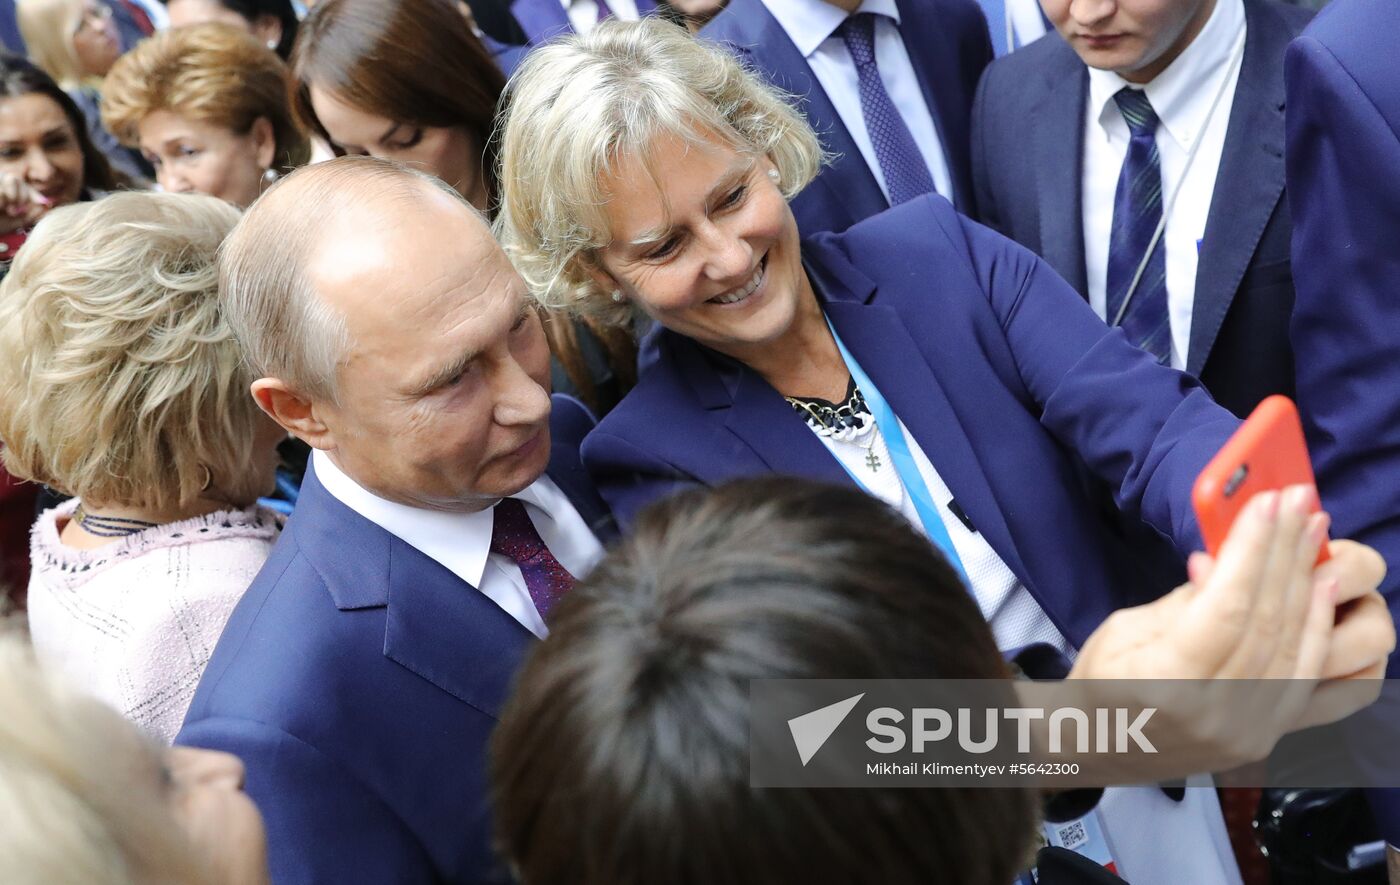 Russian President Vladimir Putin attends plenary session of 2nd Eurasian Women's Forum